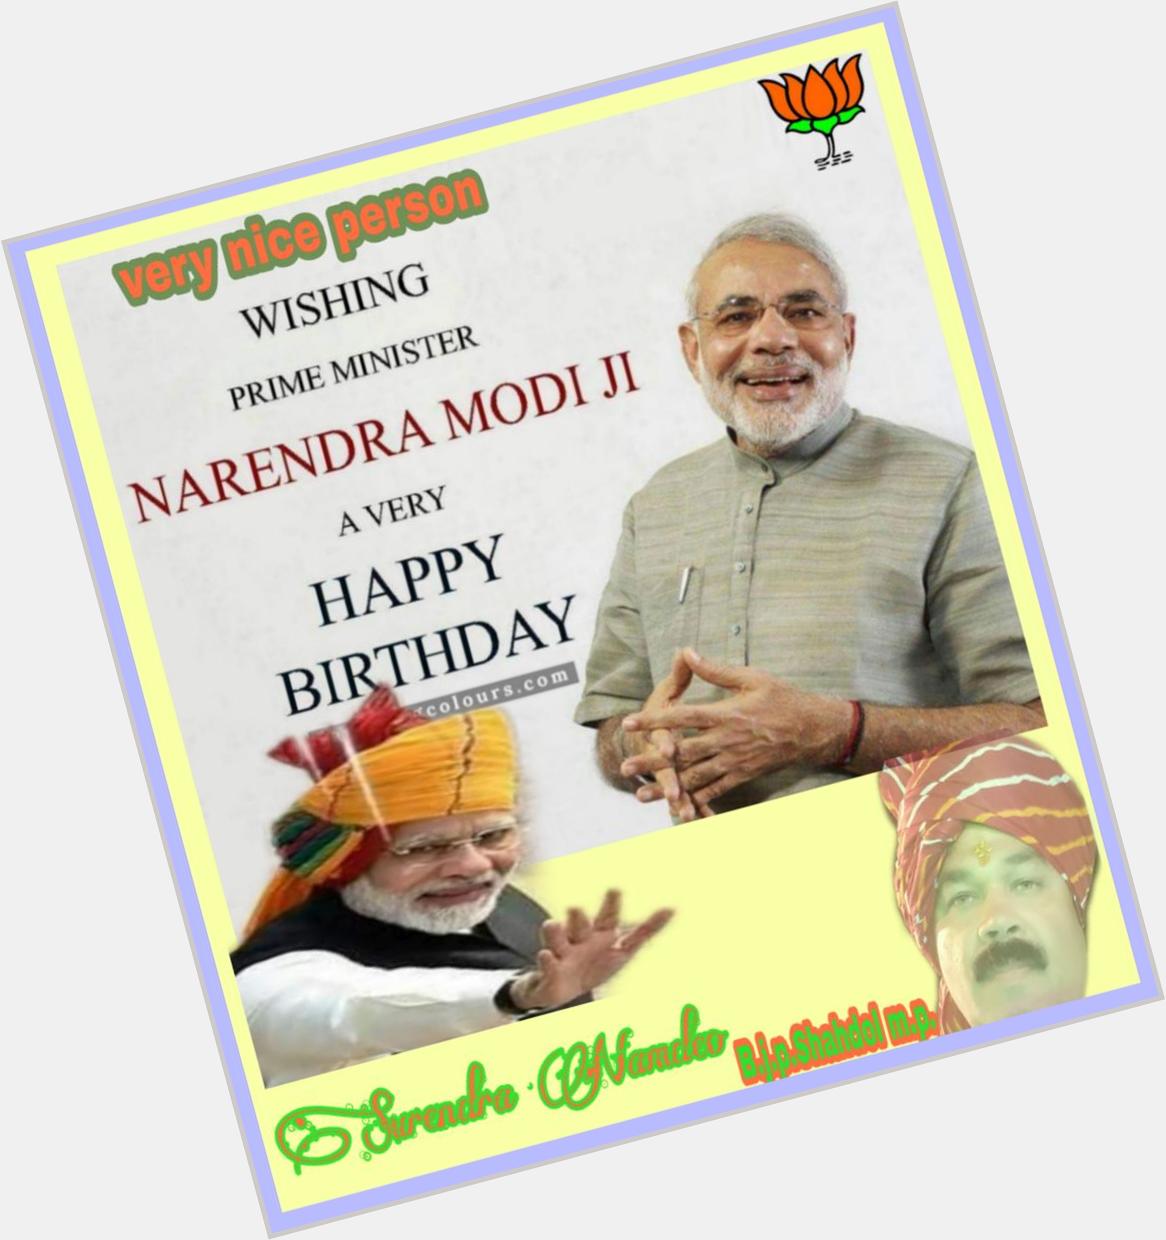 Wishing p.m.narendra modi ji a very happy birthday               